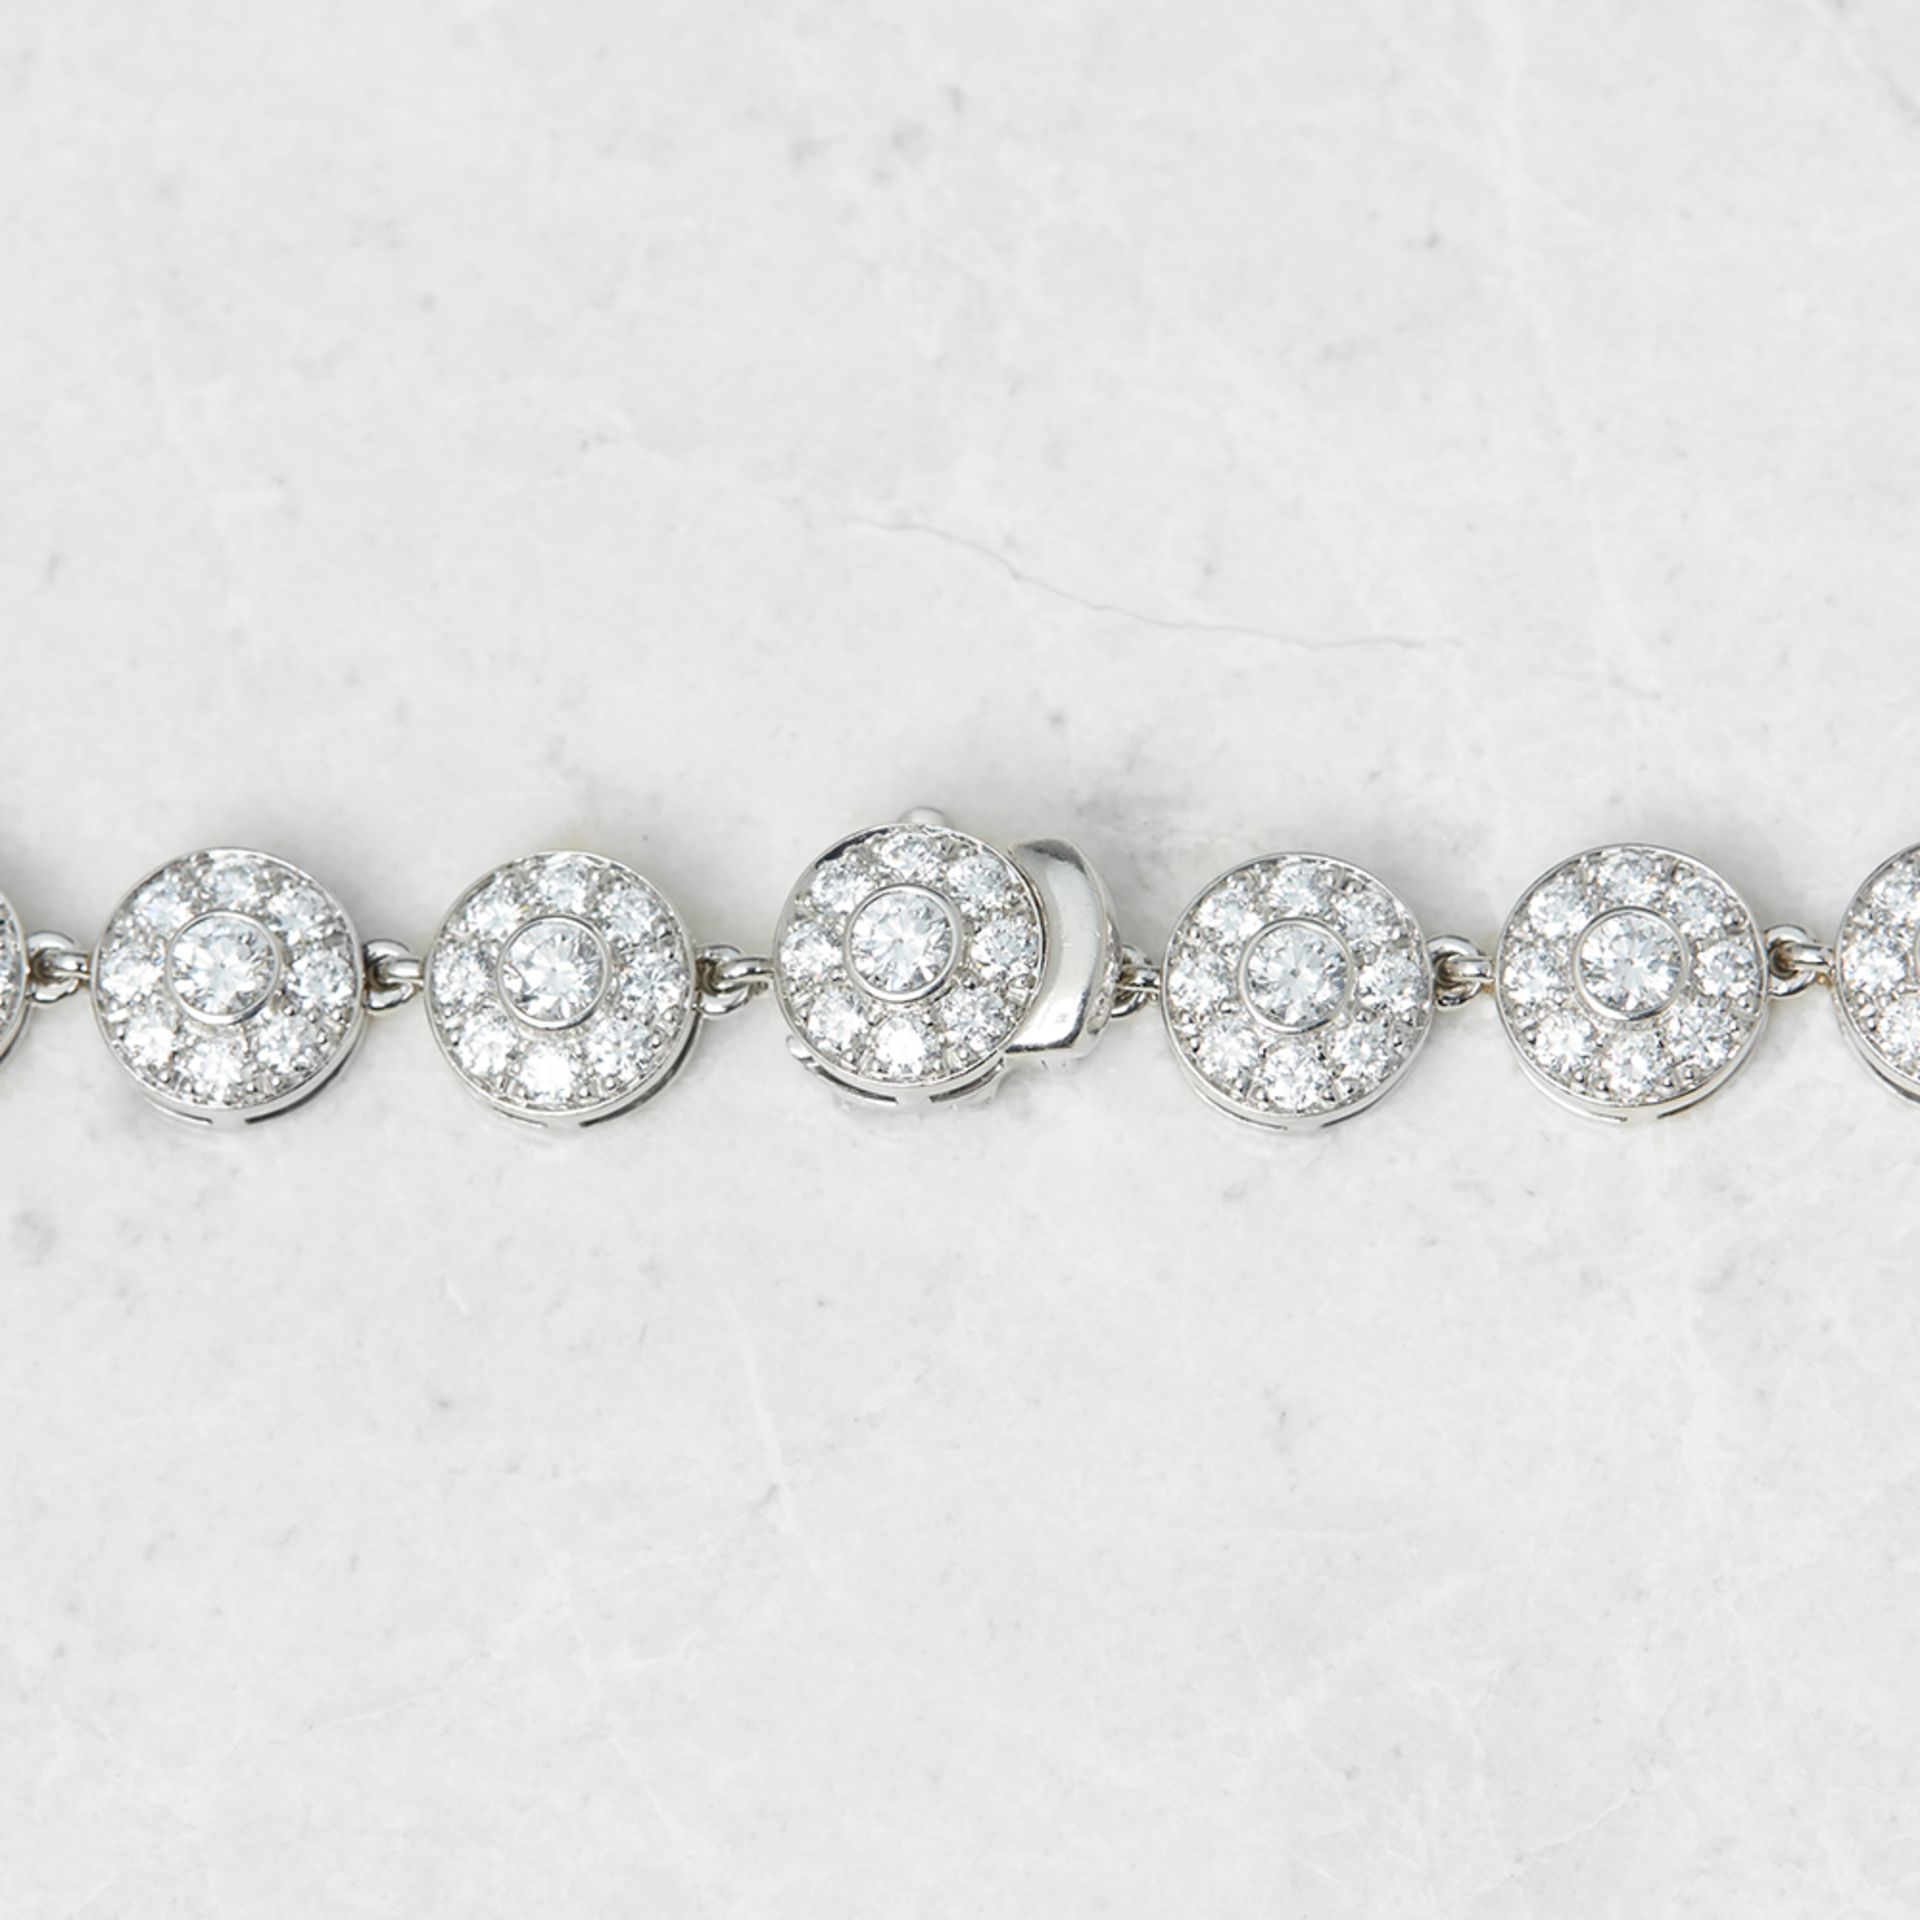 Tiffany & Co. Platinum 6.44ct Diamond Circlet Necklace with Tiffany & Co. Box - Image 4 of 14